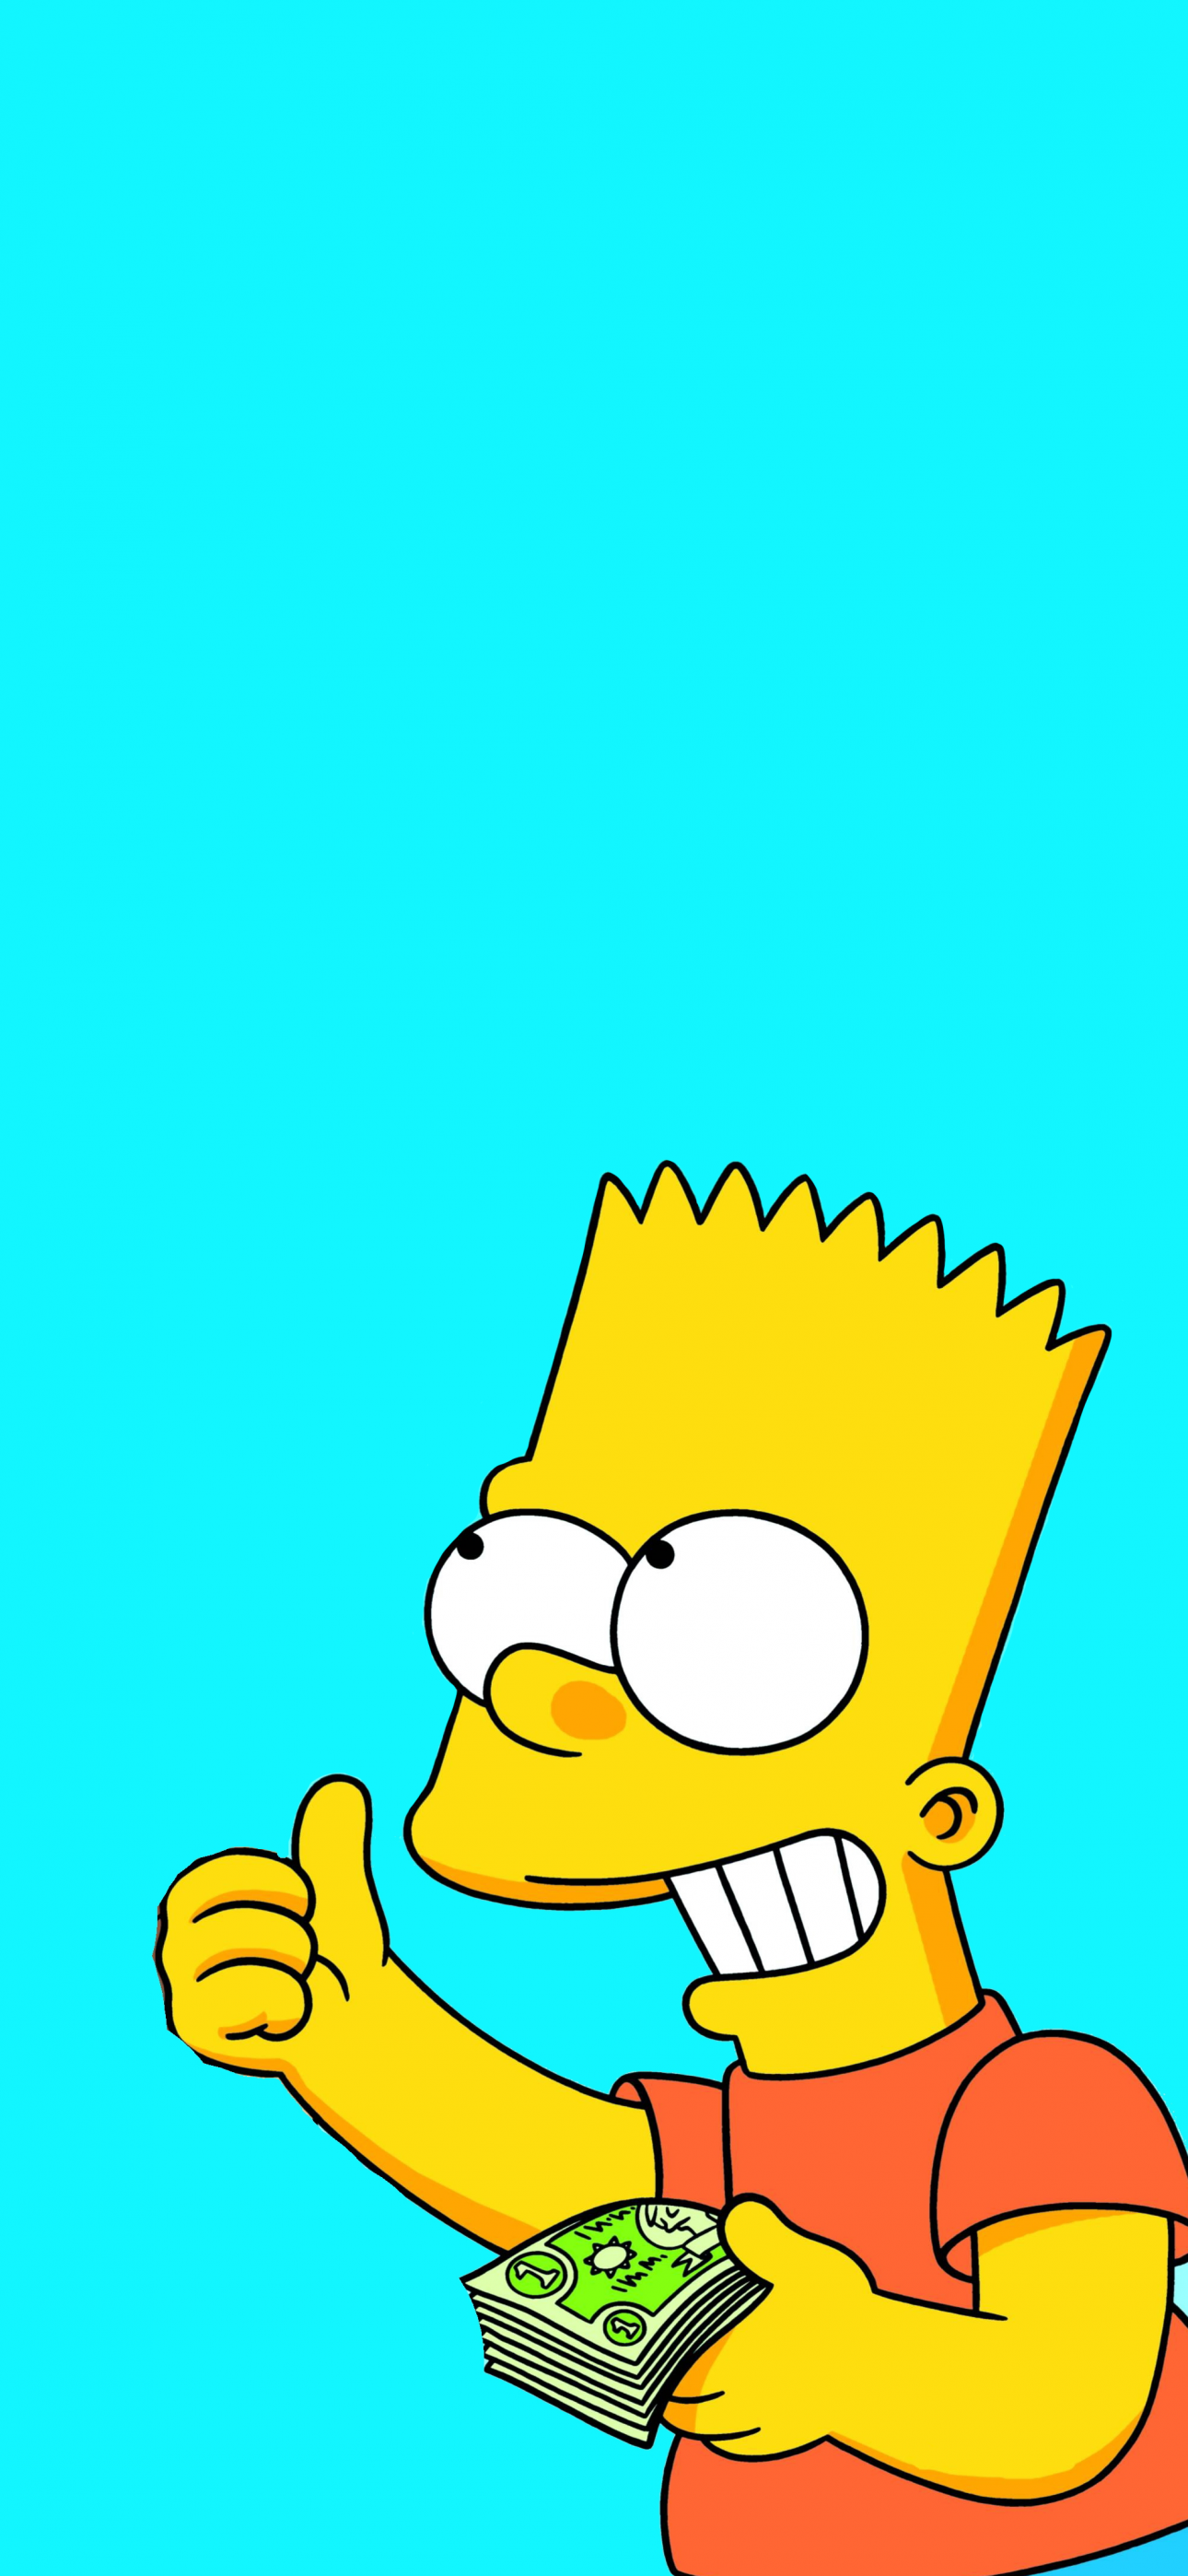 Homer Simpson 4K 5K HD The Simpsons Wallpapers  HD Wallpapers  ID 99417